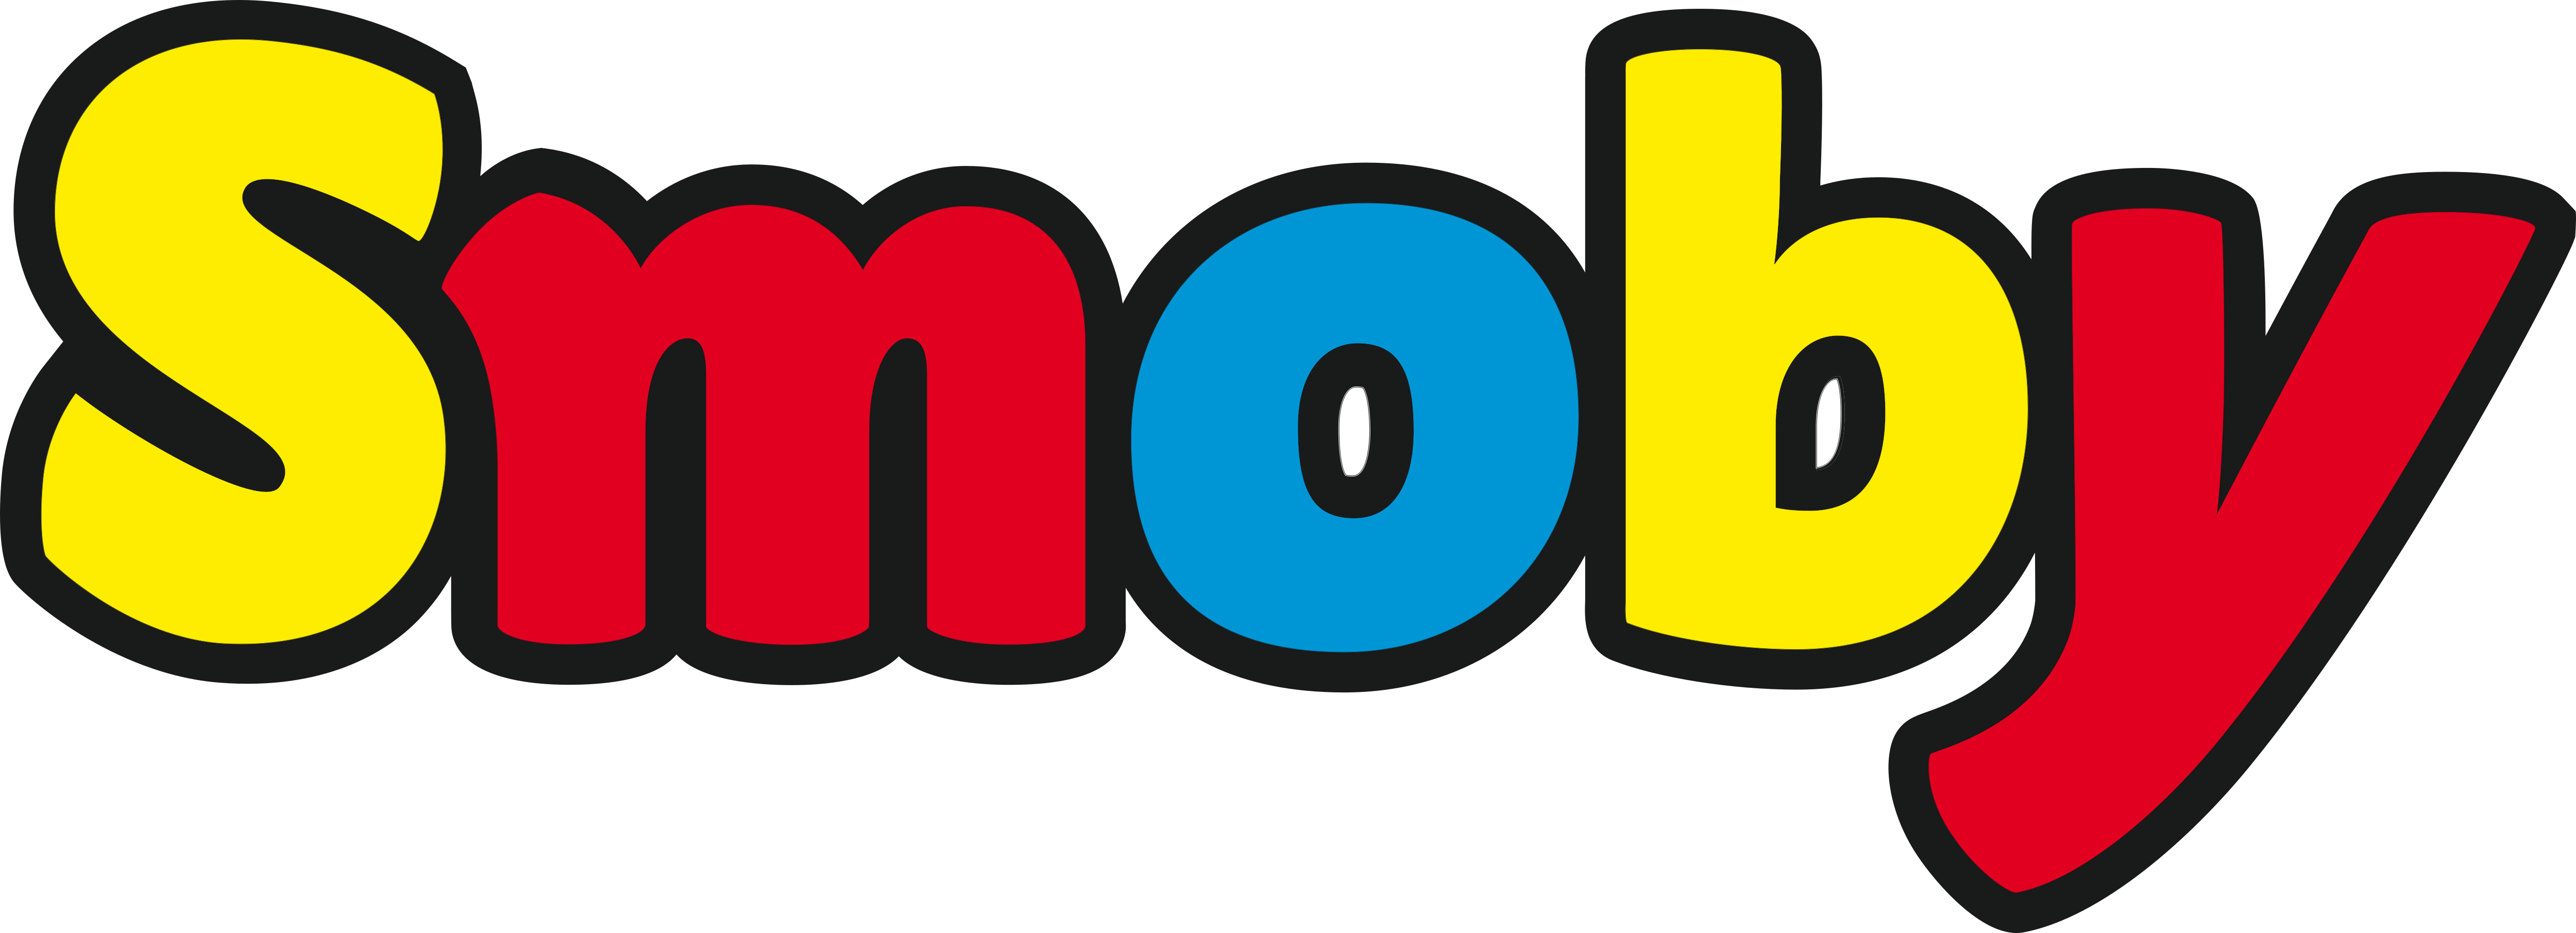 Smoby_Logo